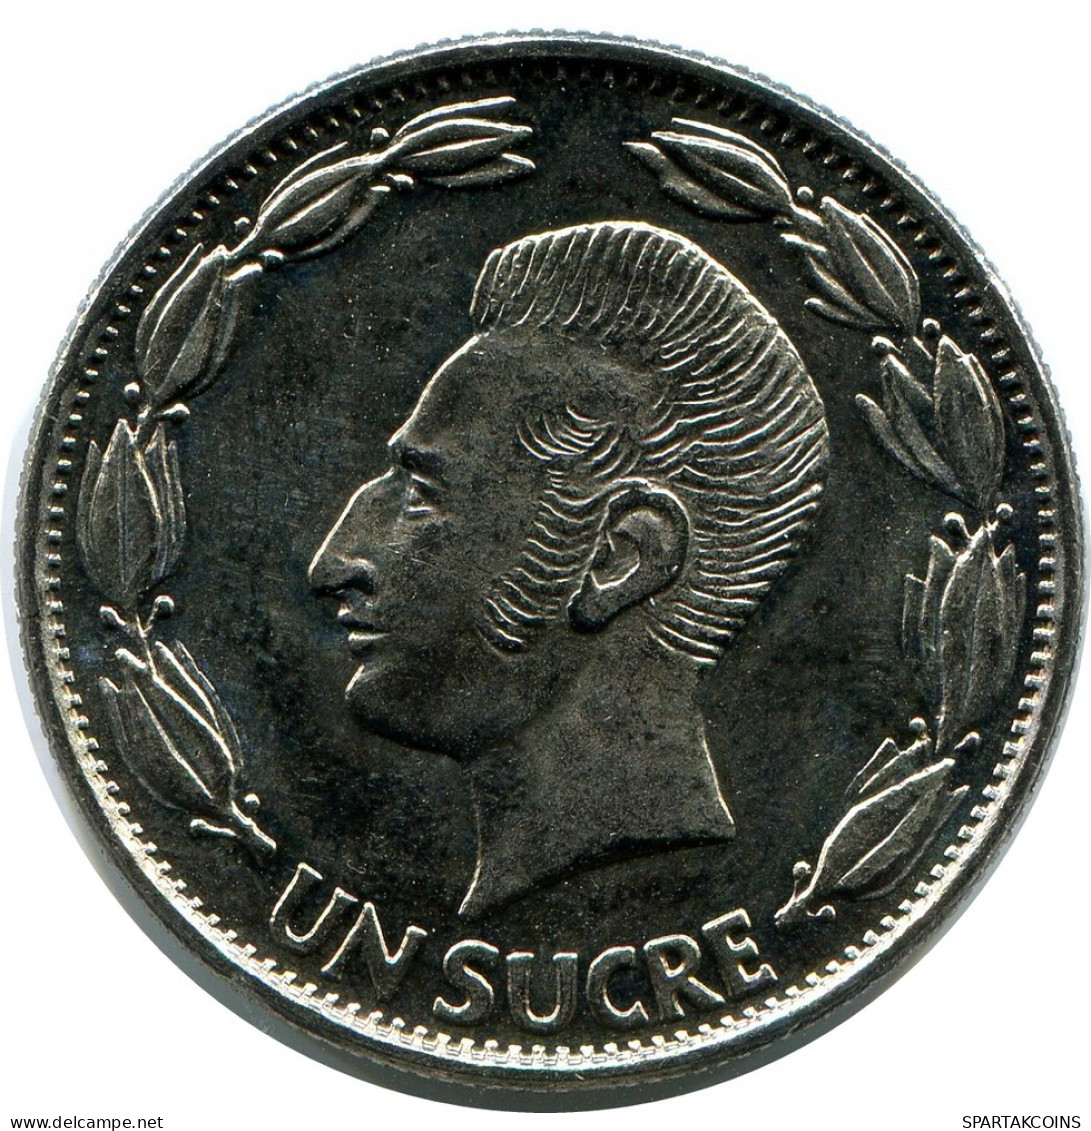 1 SUCRE 1980 ECUADOR Coin #AZ168.U - Ecuador